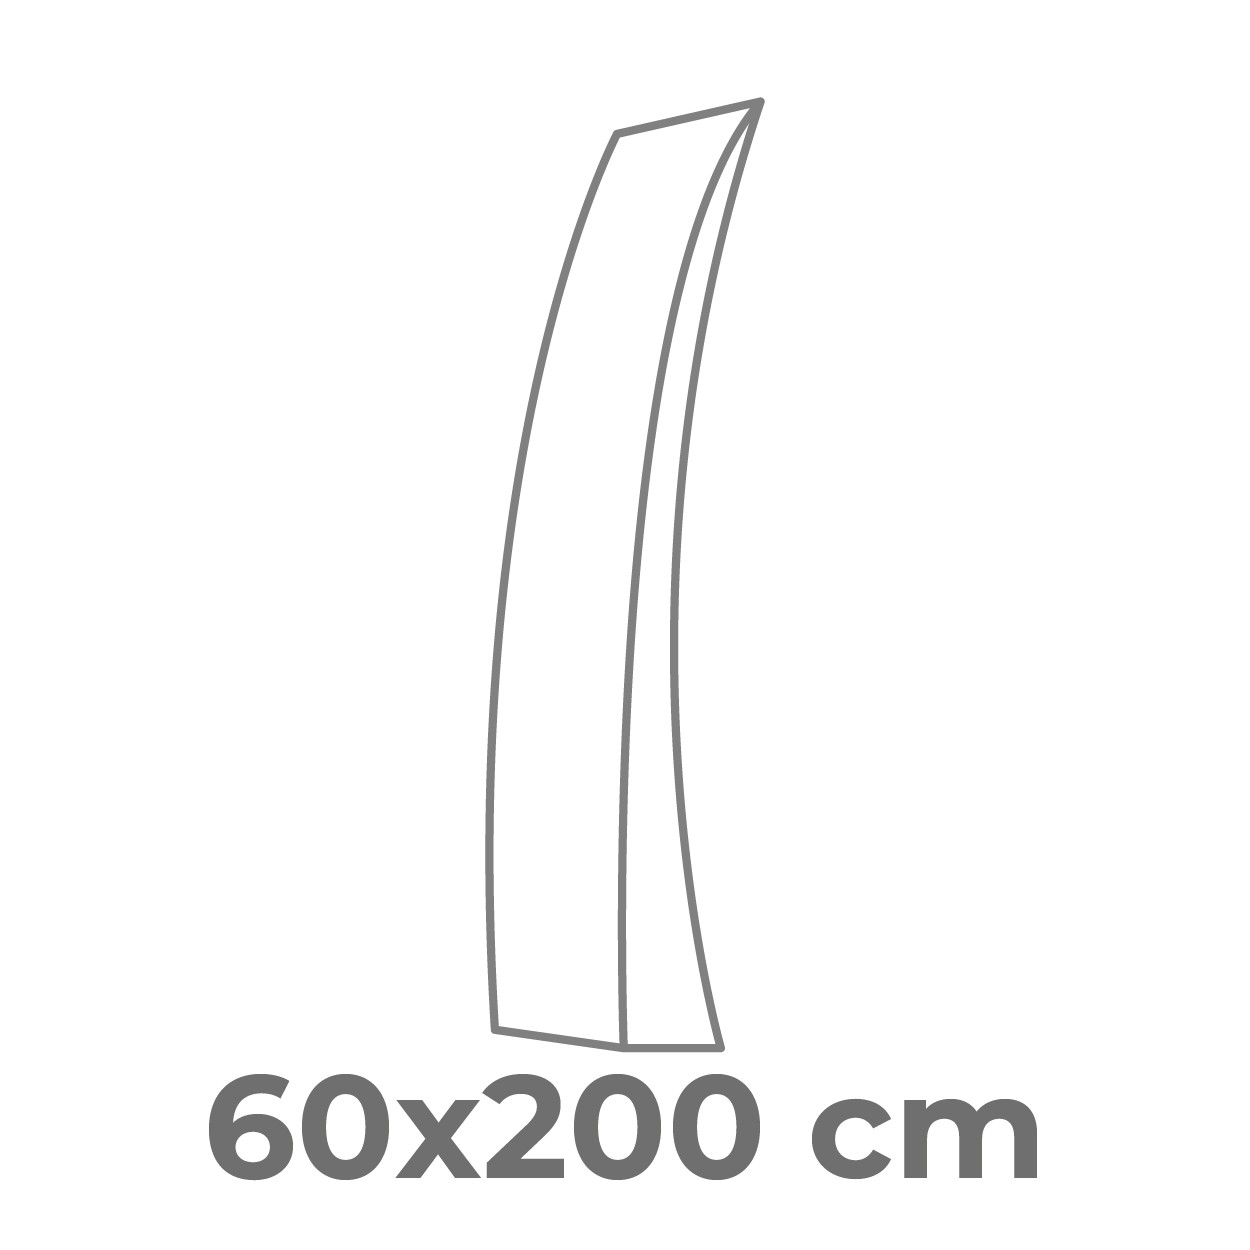 Vela - 60x200 cm